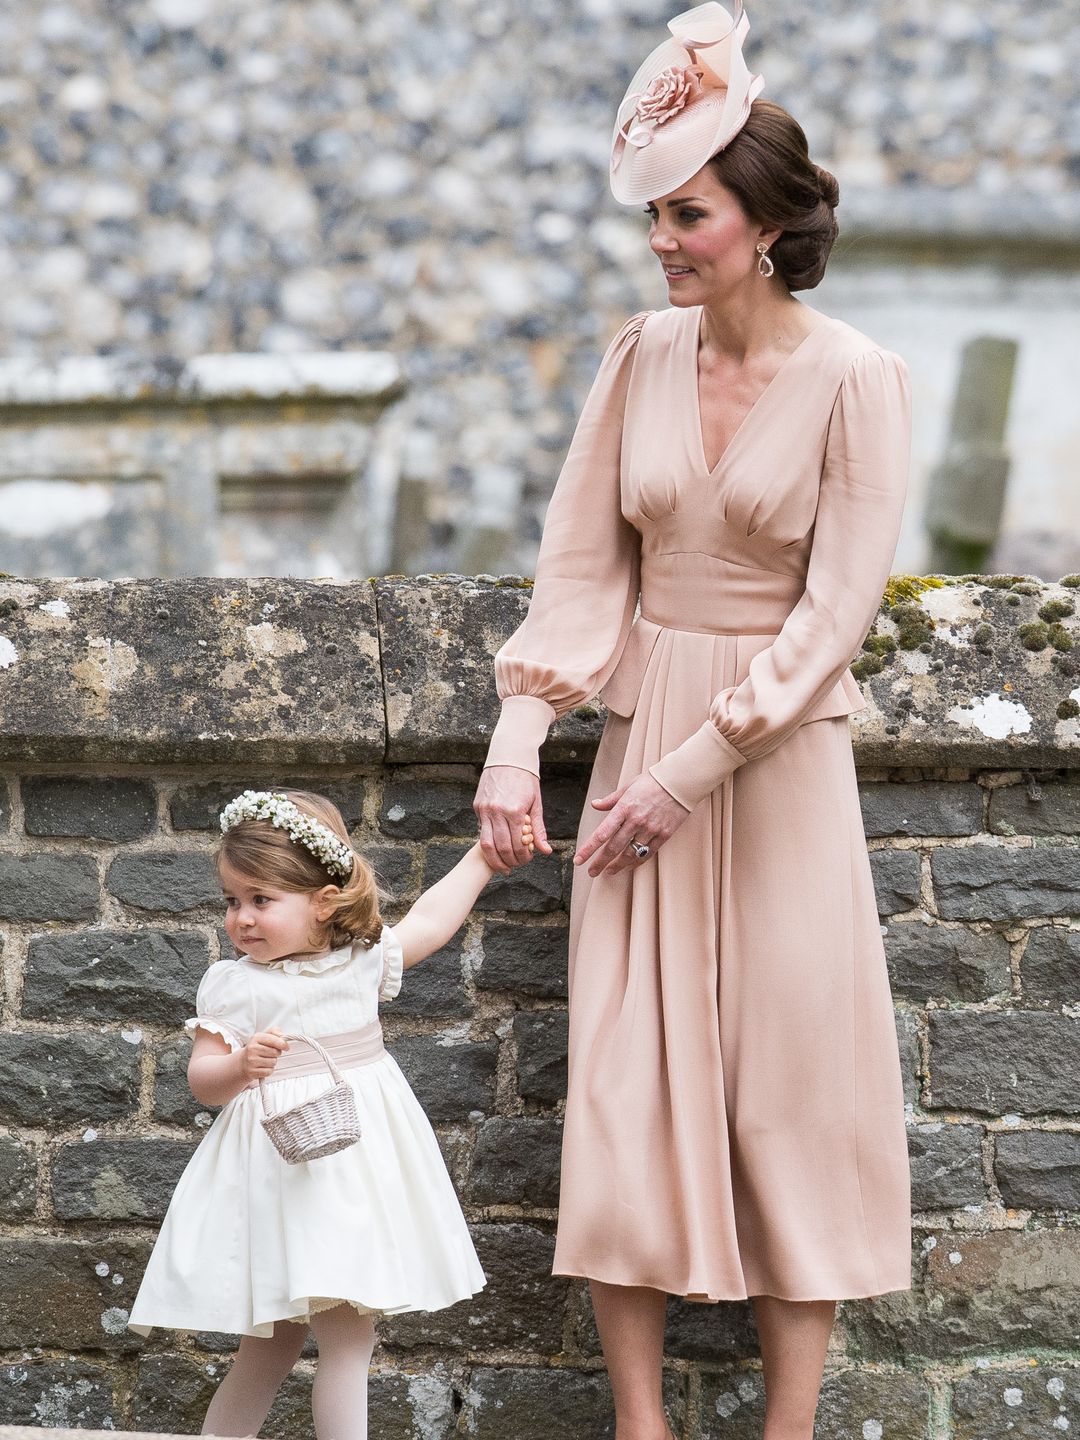 Kate Middleton wearing a pale pink dress 